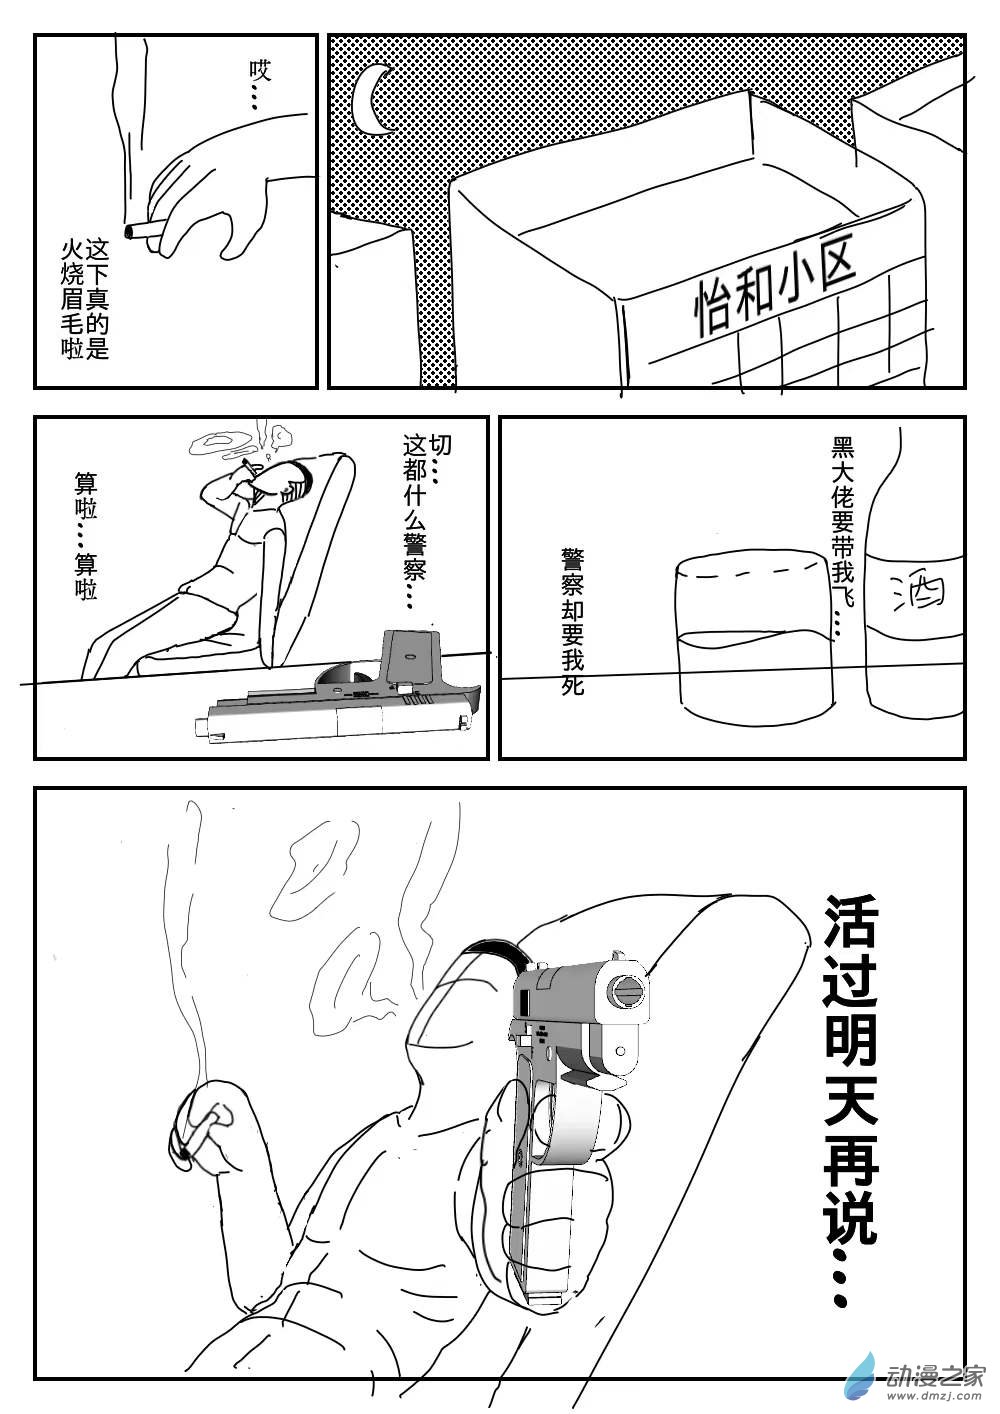 K神的短篇漫畫集 - 01 臥底阿潮 - 2